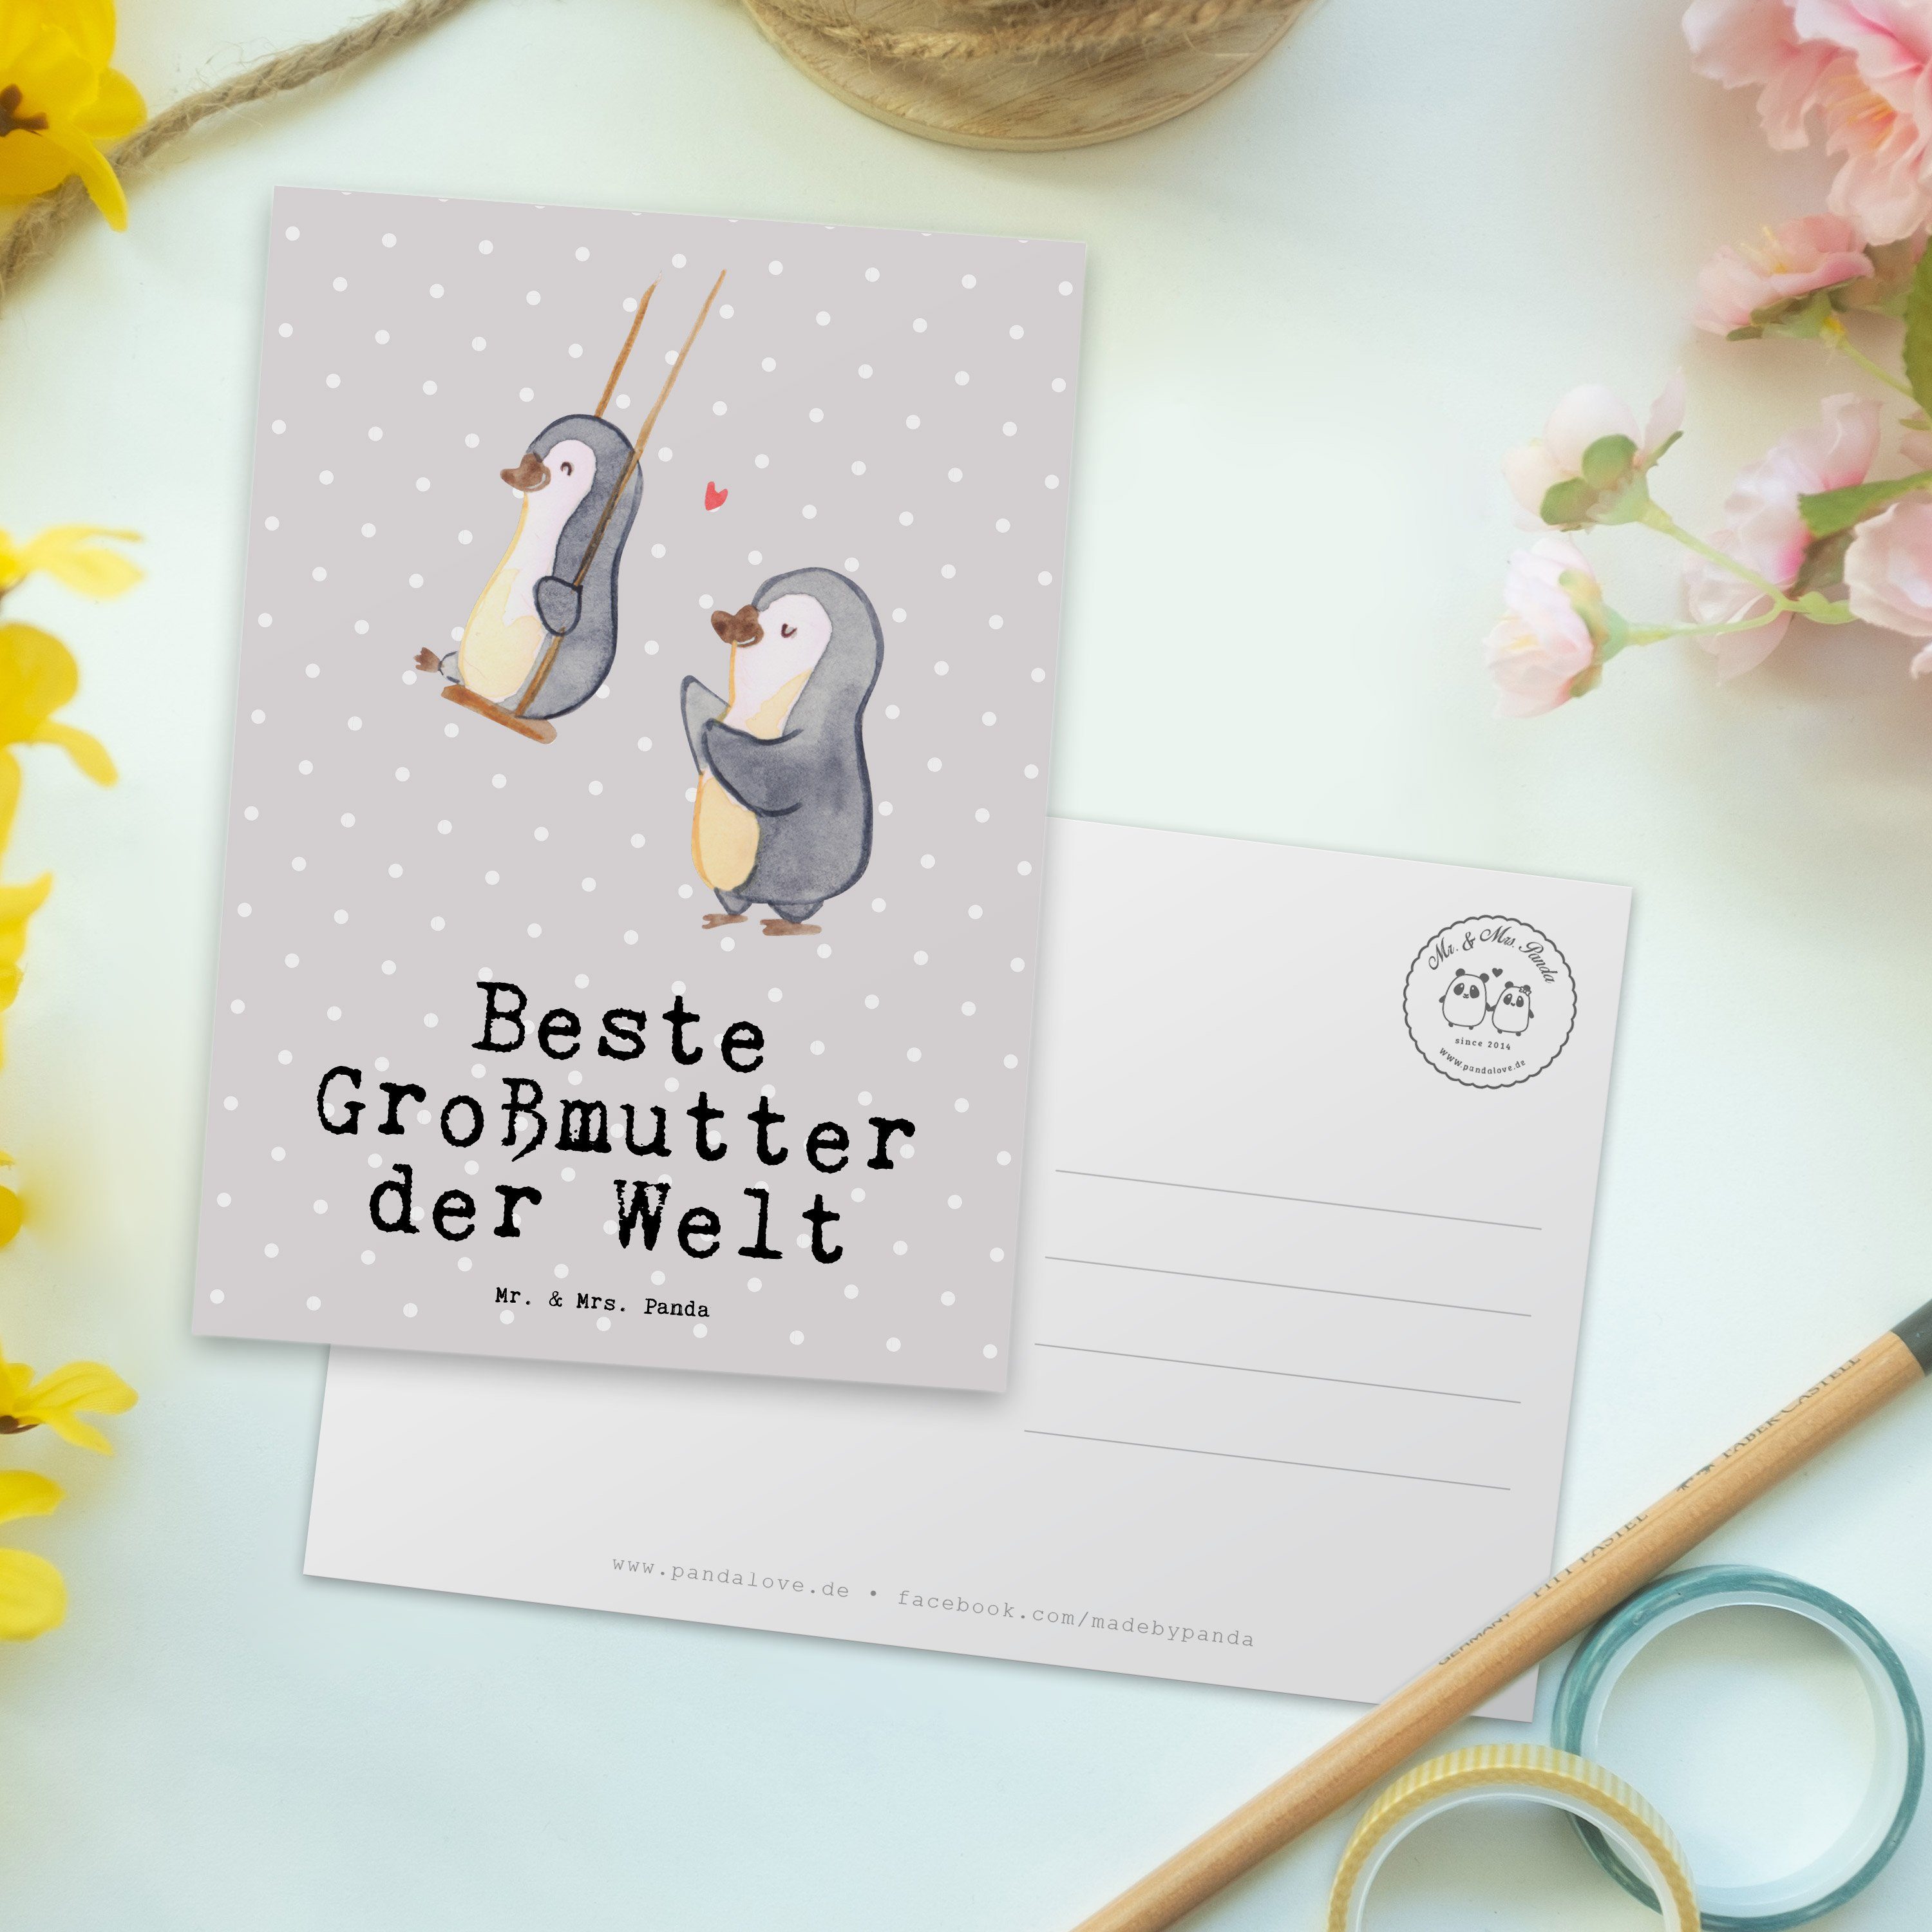 Mr. & Mrs. Panda - Beste Omi, Gro Pinguin Großmutter Pastell - Grau Welt Postkarte der Geschenk